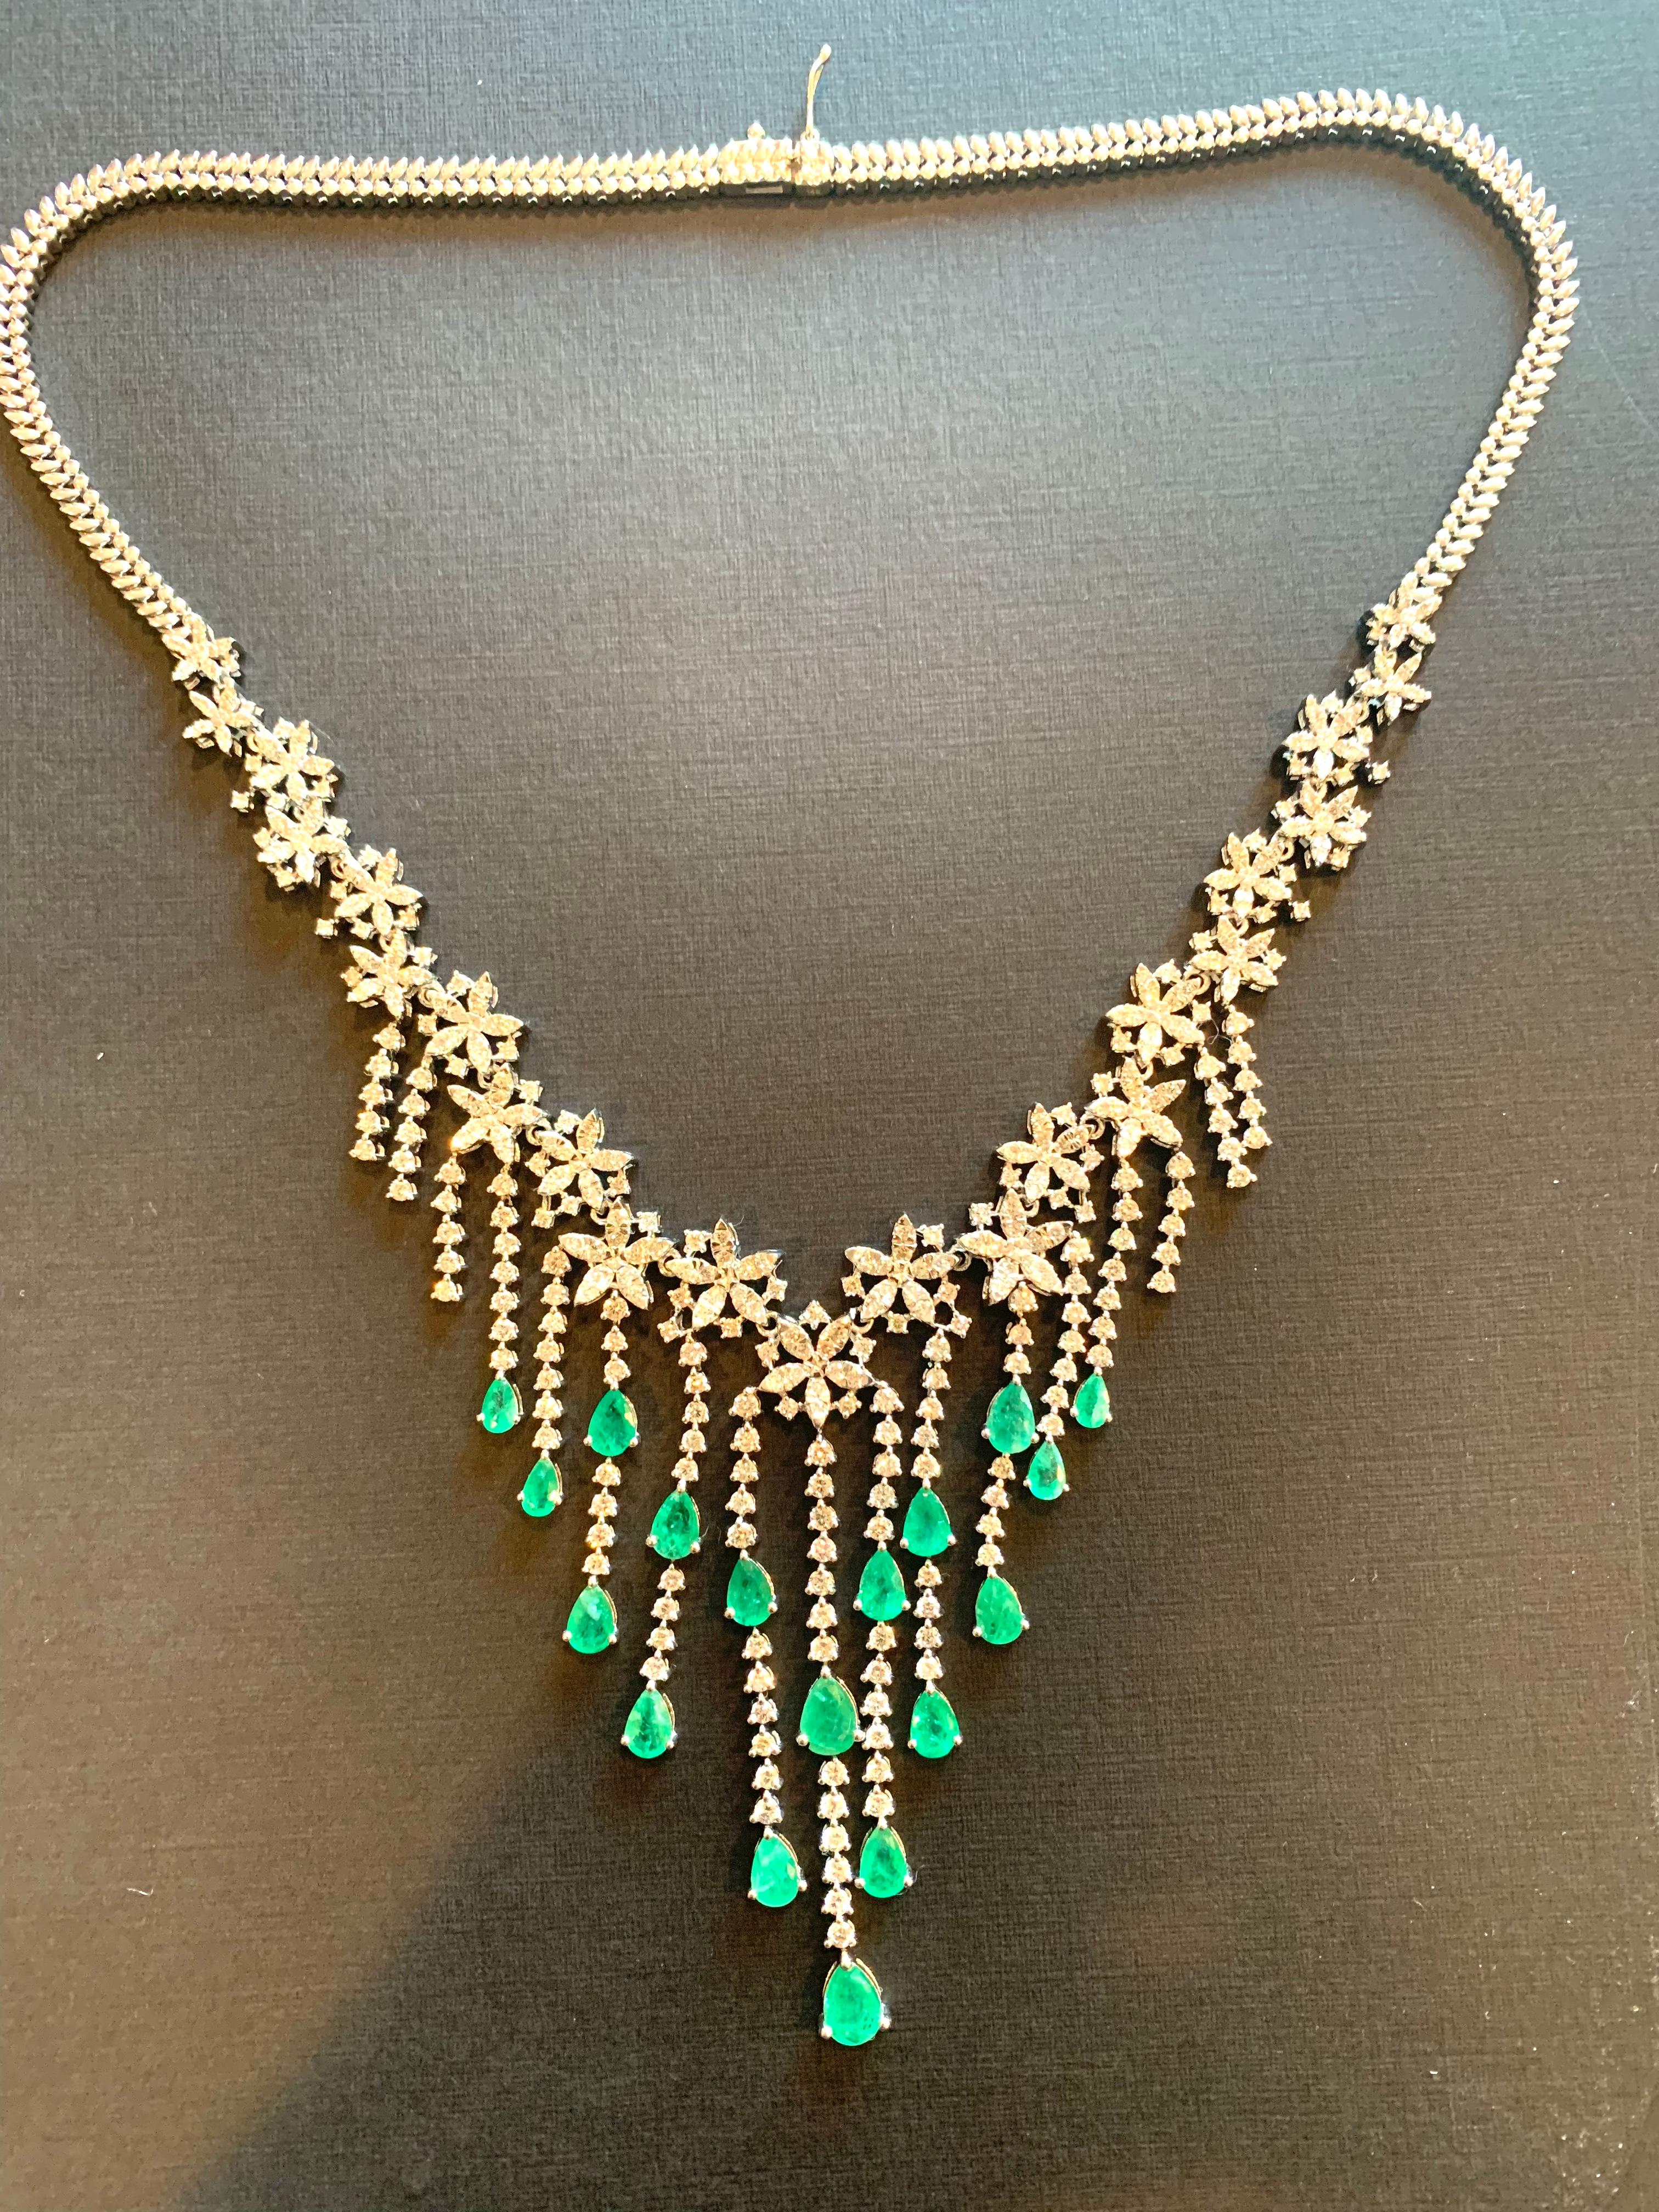 Mixed Cut 7.30 Carat Diamond Emerald 14 Karat White Gold Statement Necklace For Sale